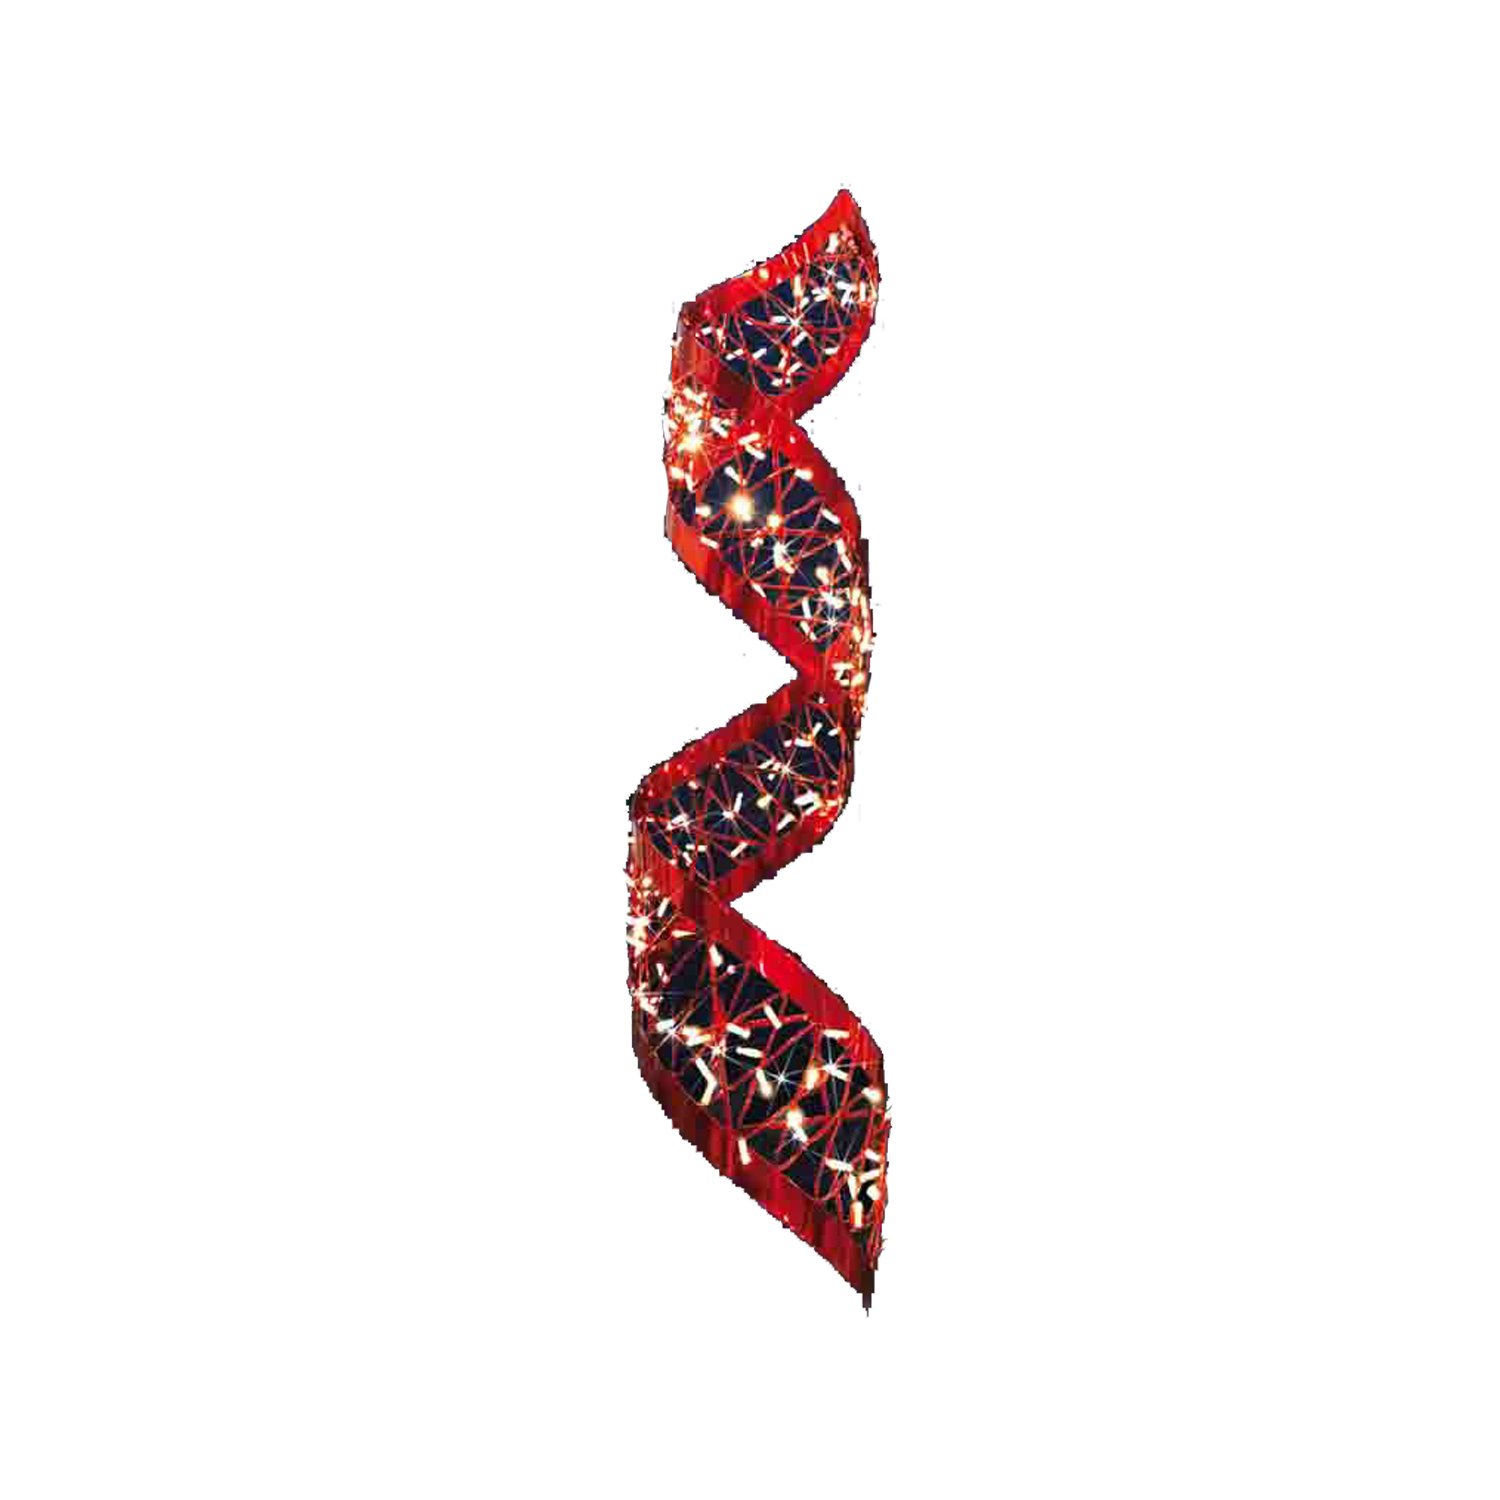 3D Swirl - Christmas Decor Display - Red - 4.3ft tall